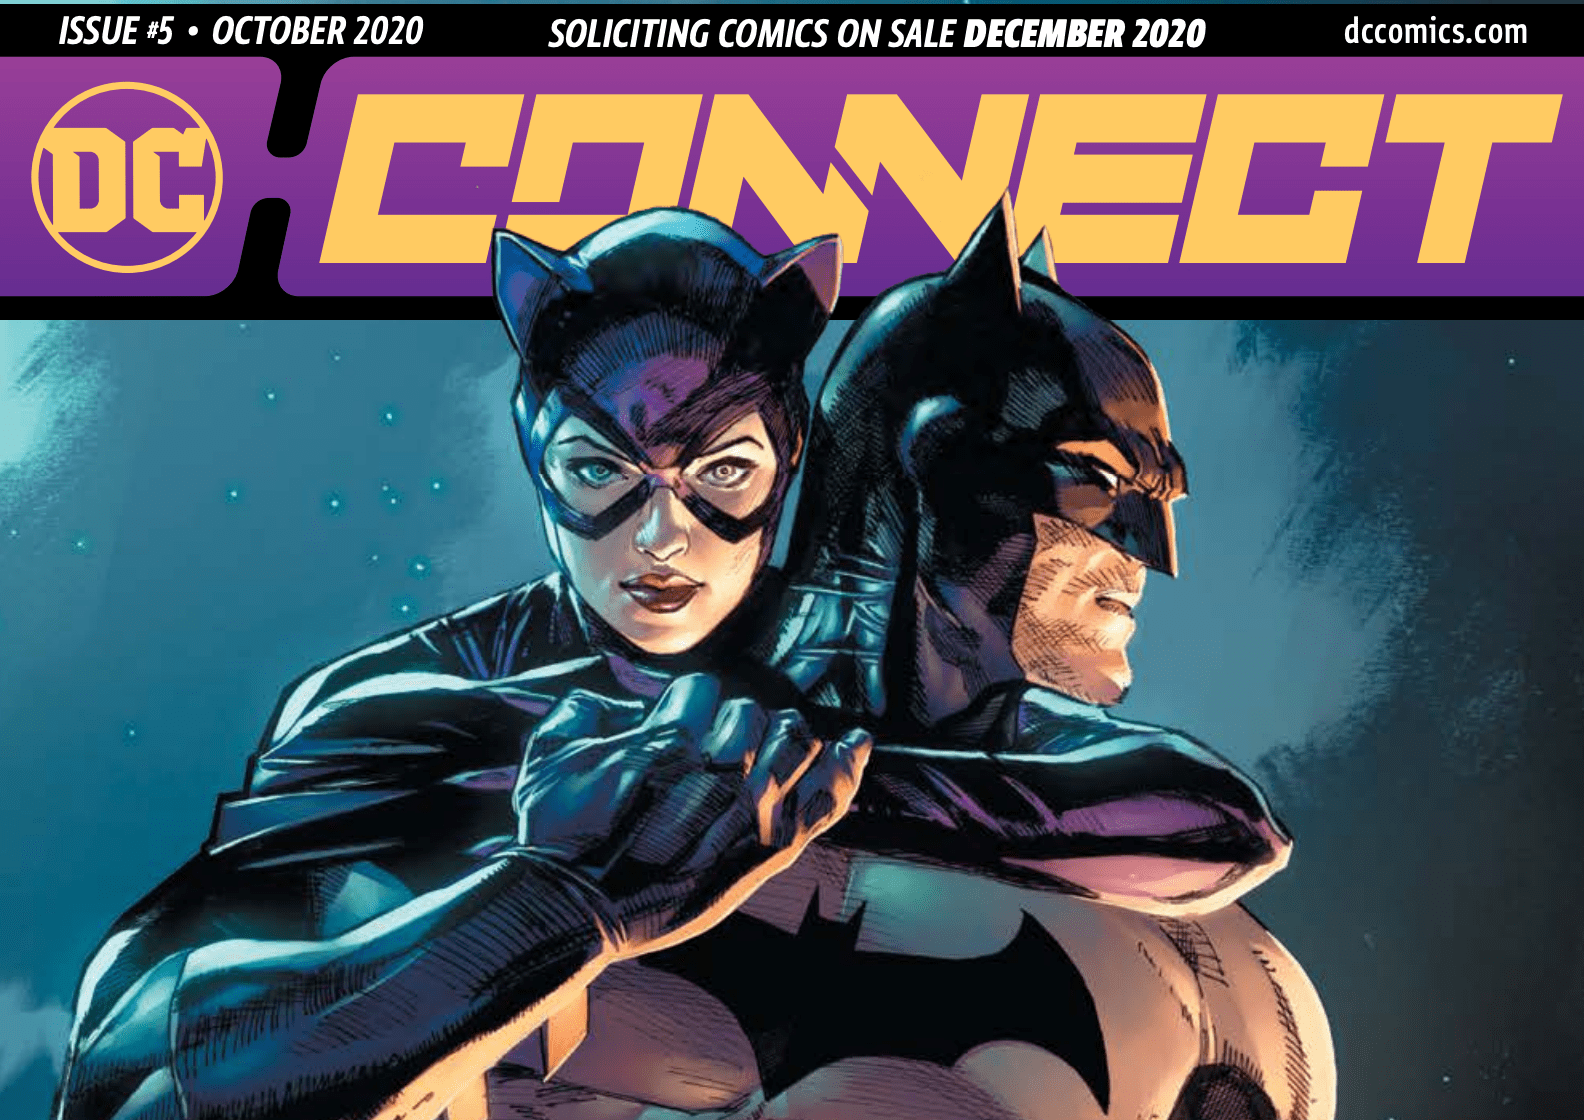 December 2020 DC Comics solicitations: Interviews, 'Endless Winter' details, and more